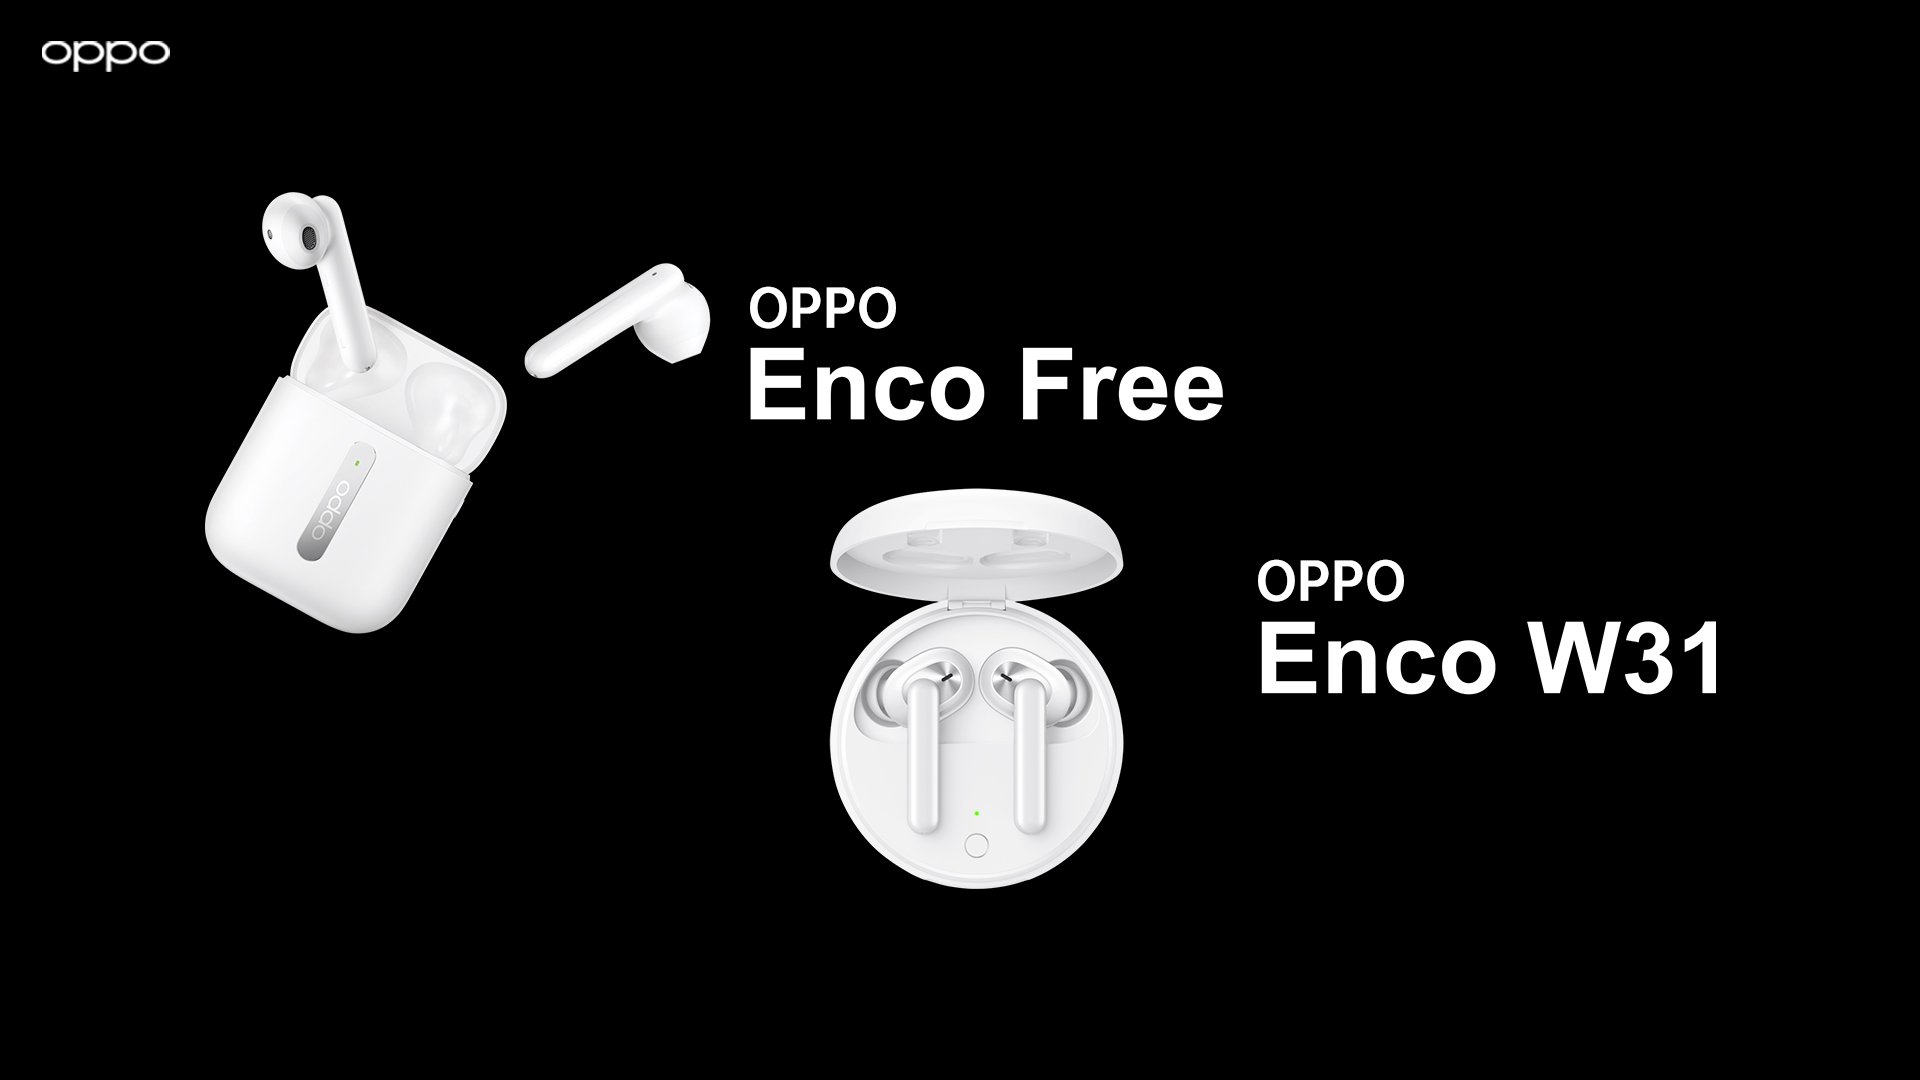 OPPO Enco Free and Enco W31